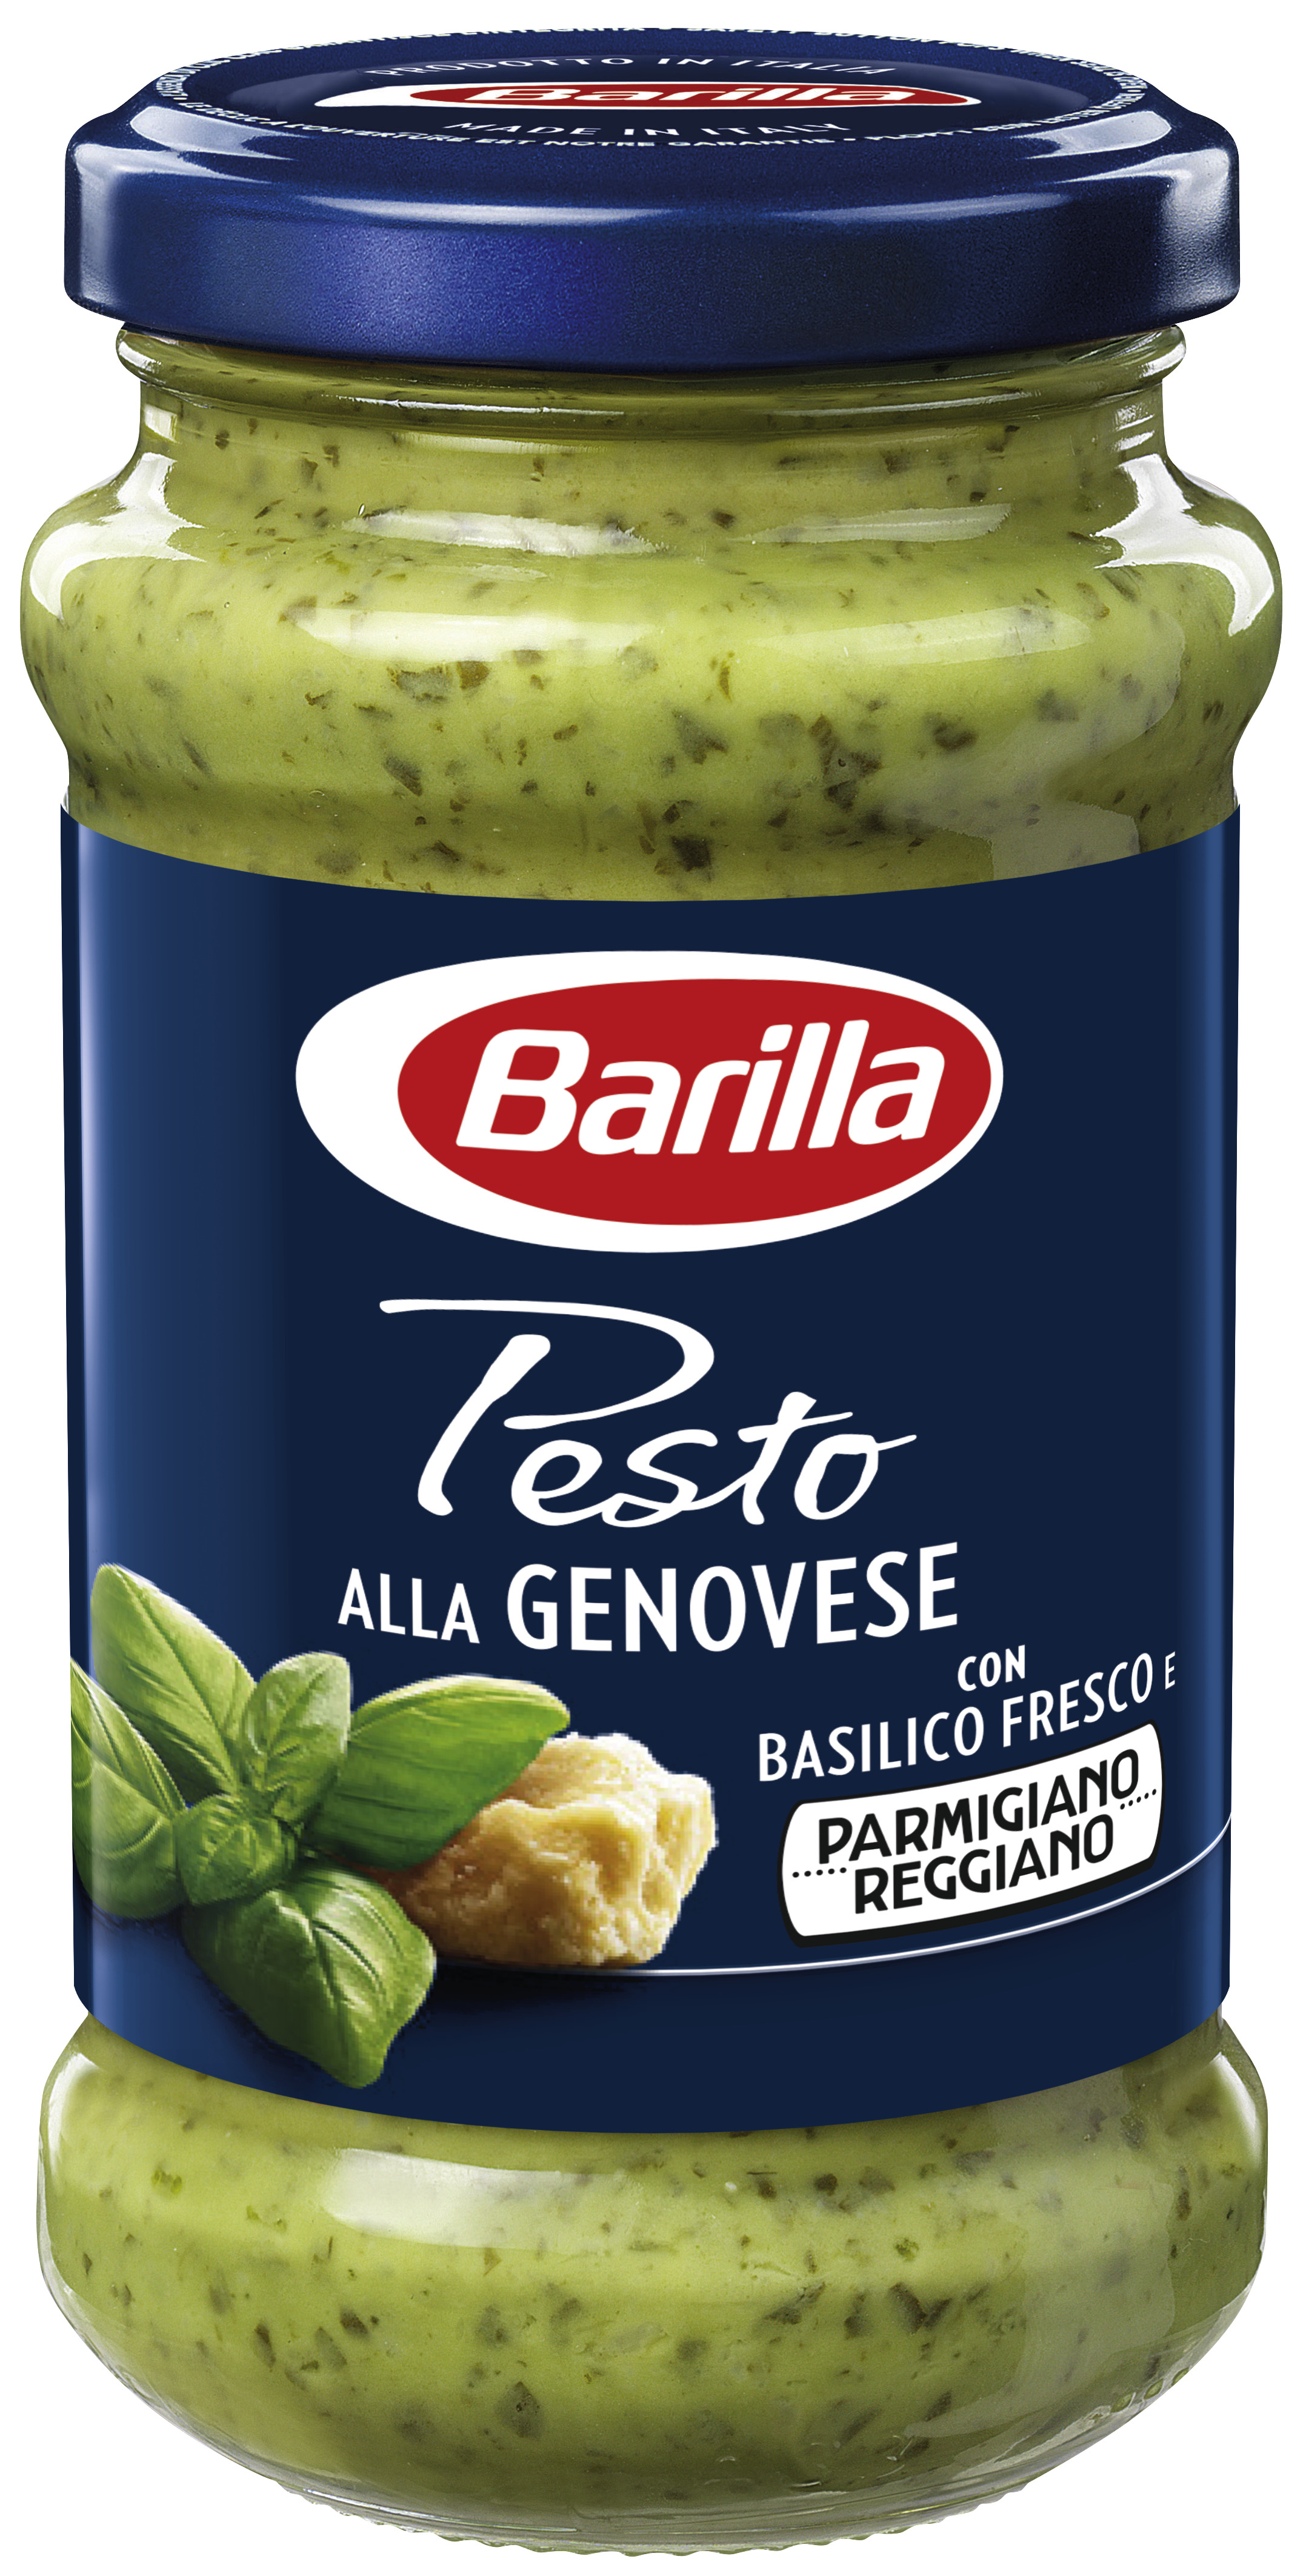 Barilla Pesto alla Genovese - PESTO SAUCE MIT BASILIKUM 190g